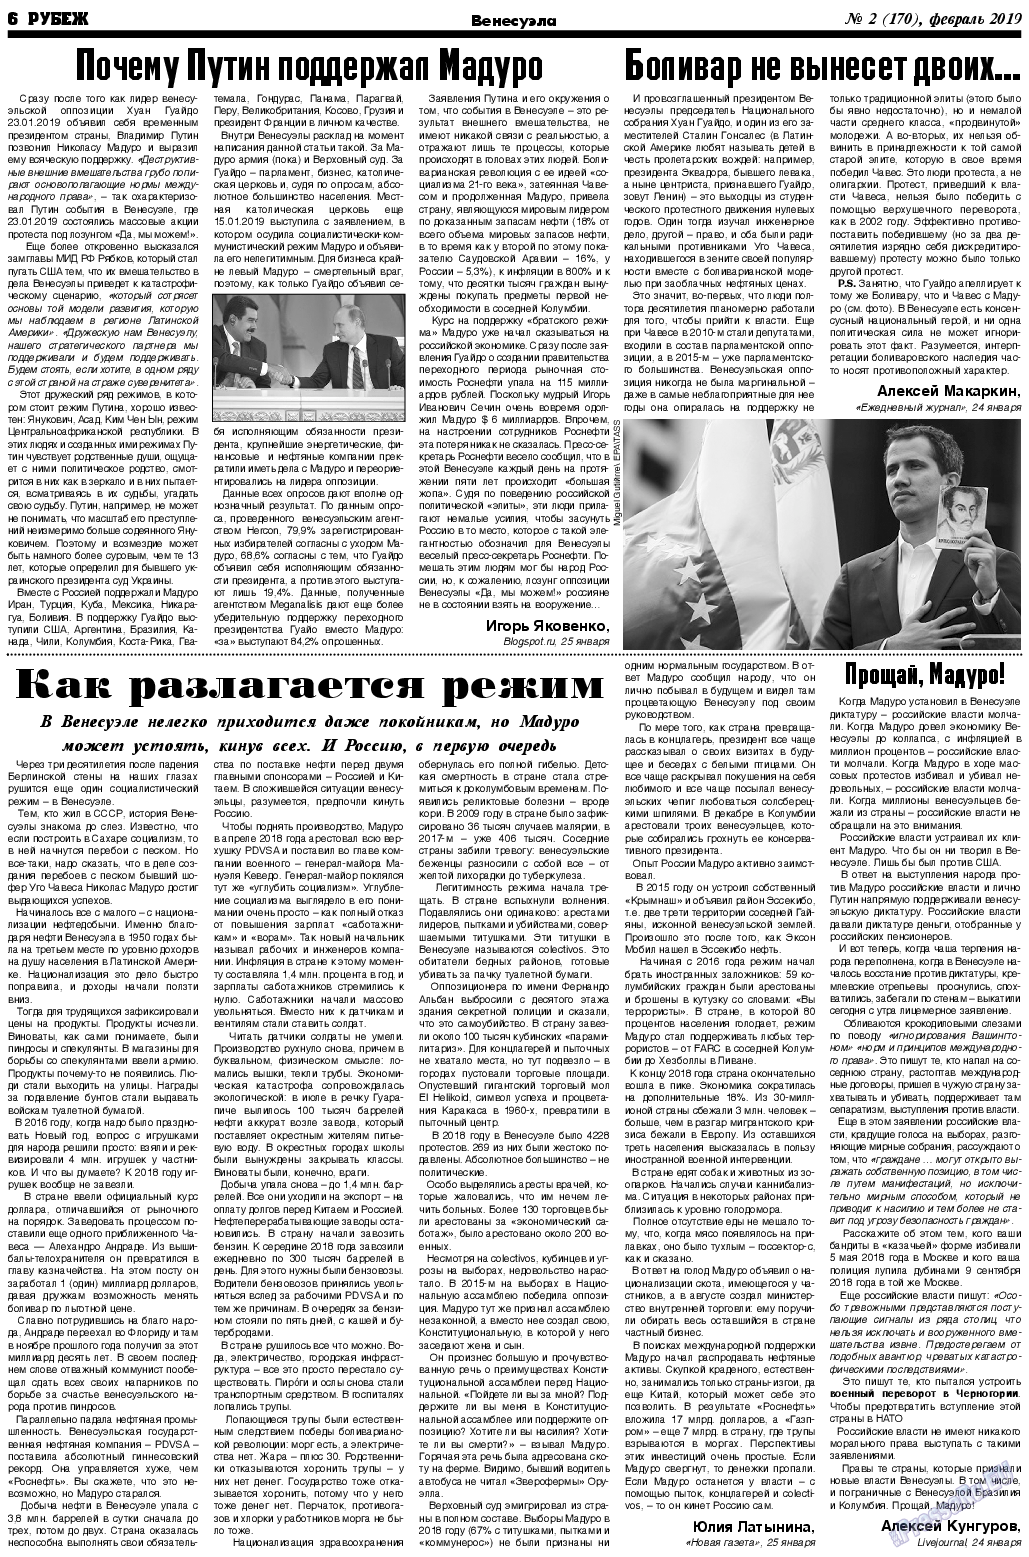 Рубеж, газета. 2019 №2 стр.6